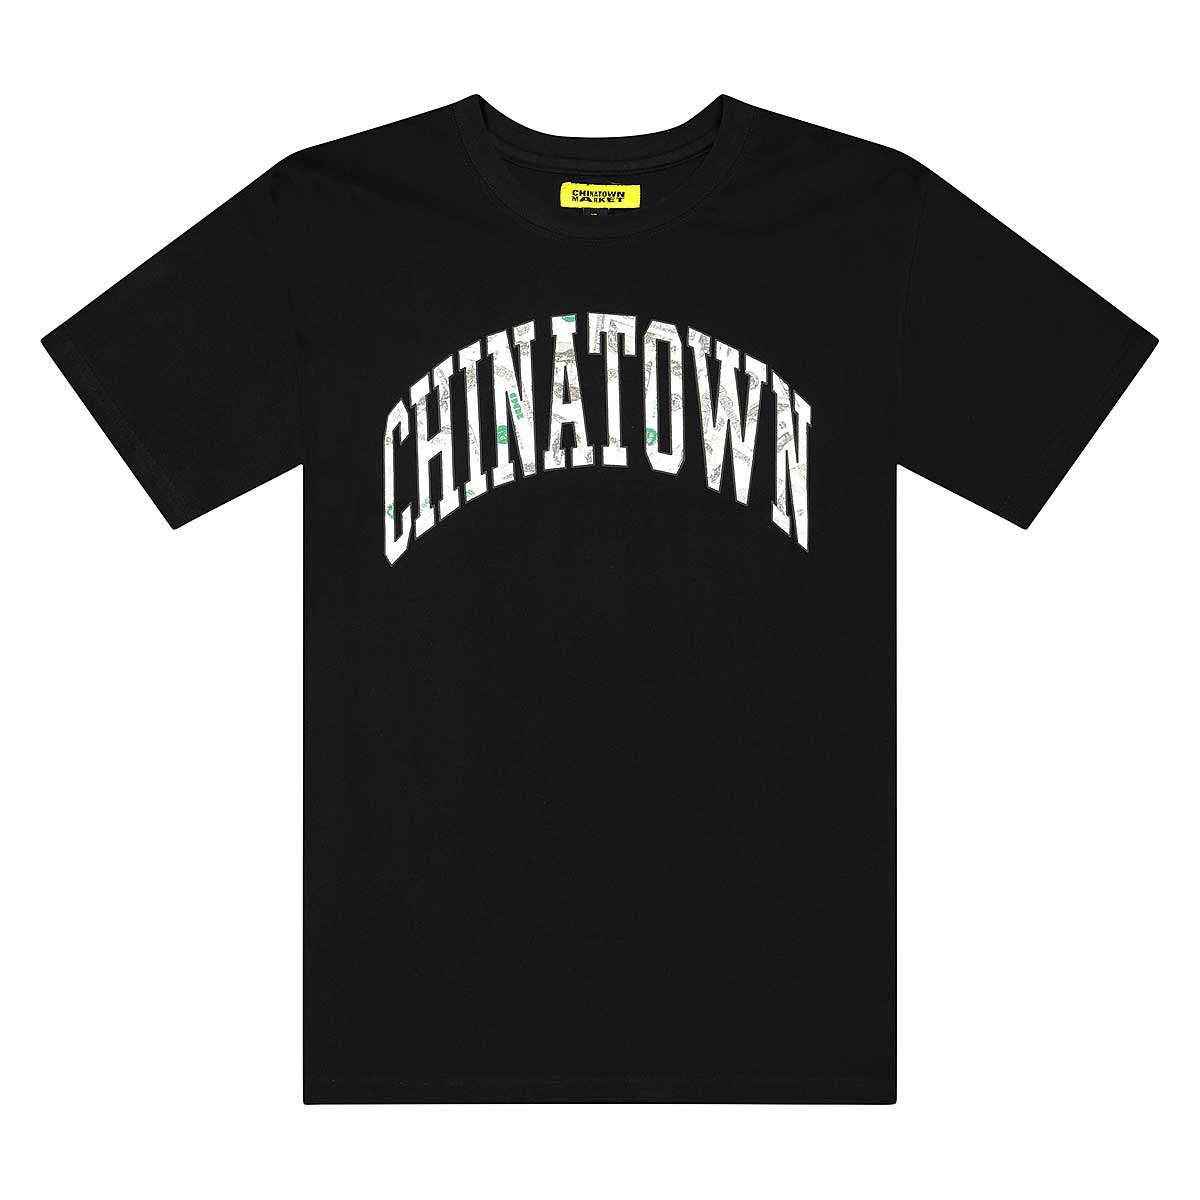 Chinatown Market Money Arc T-Shirt, Black